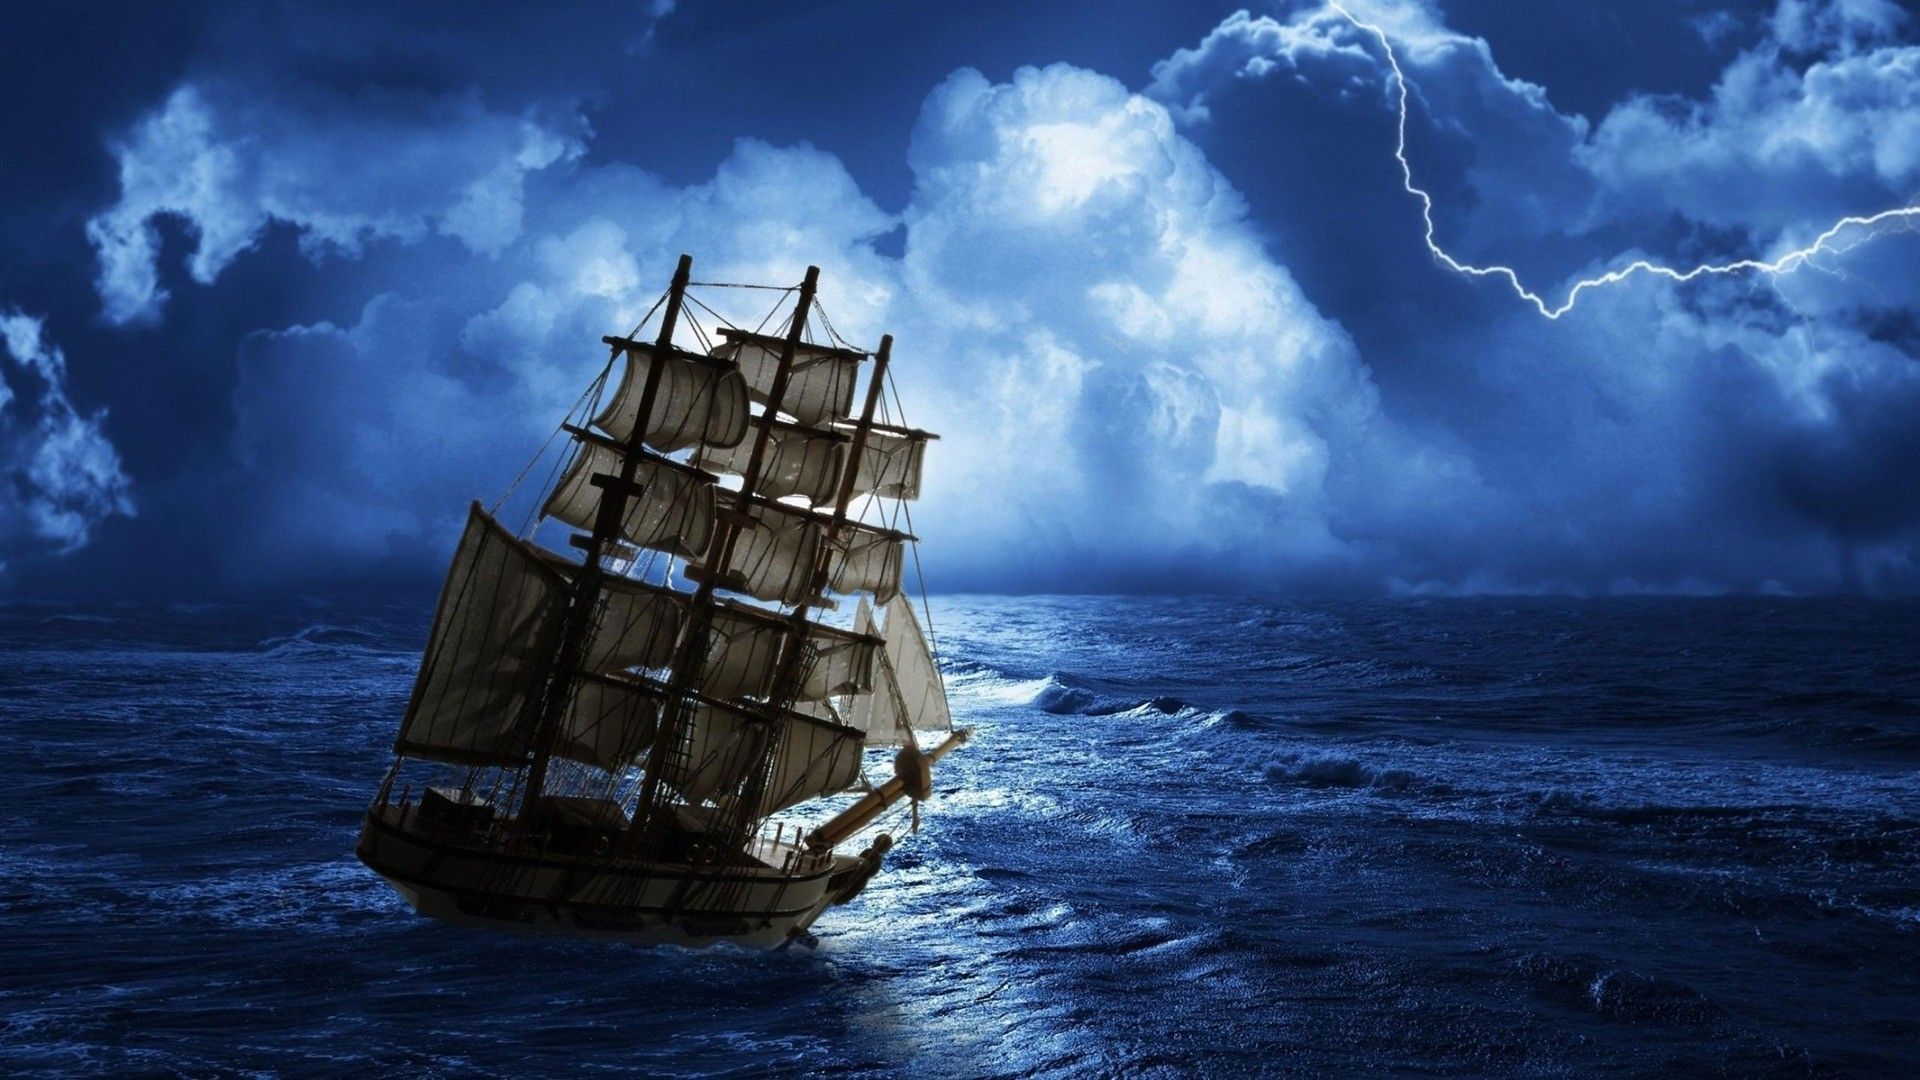 Ocean clouds storm fantasy art sailing skyscapes ships wallpaper ...